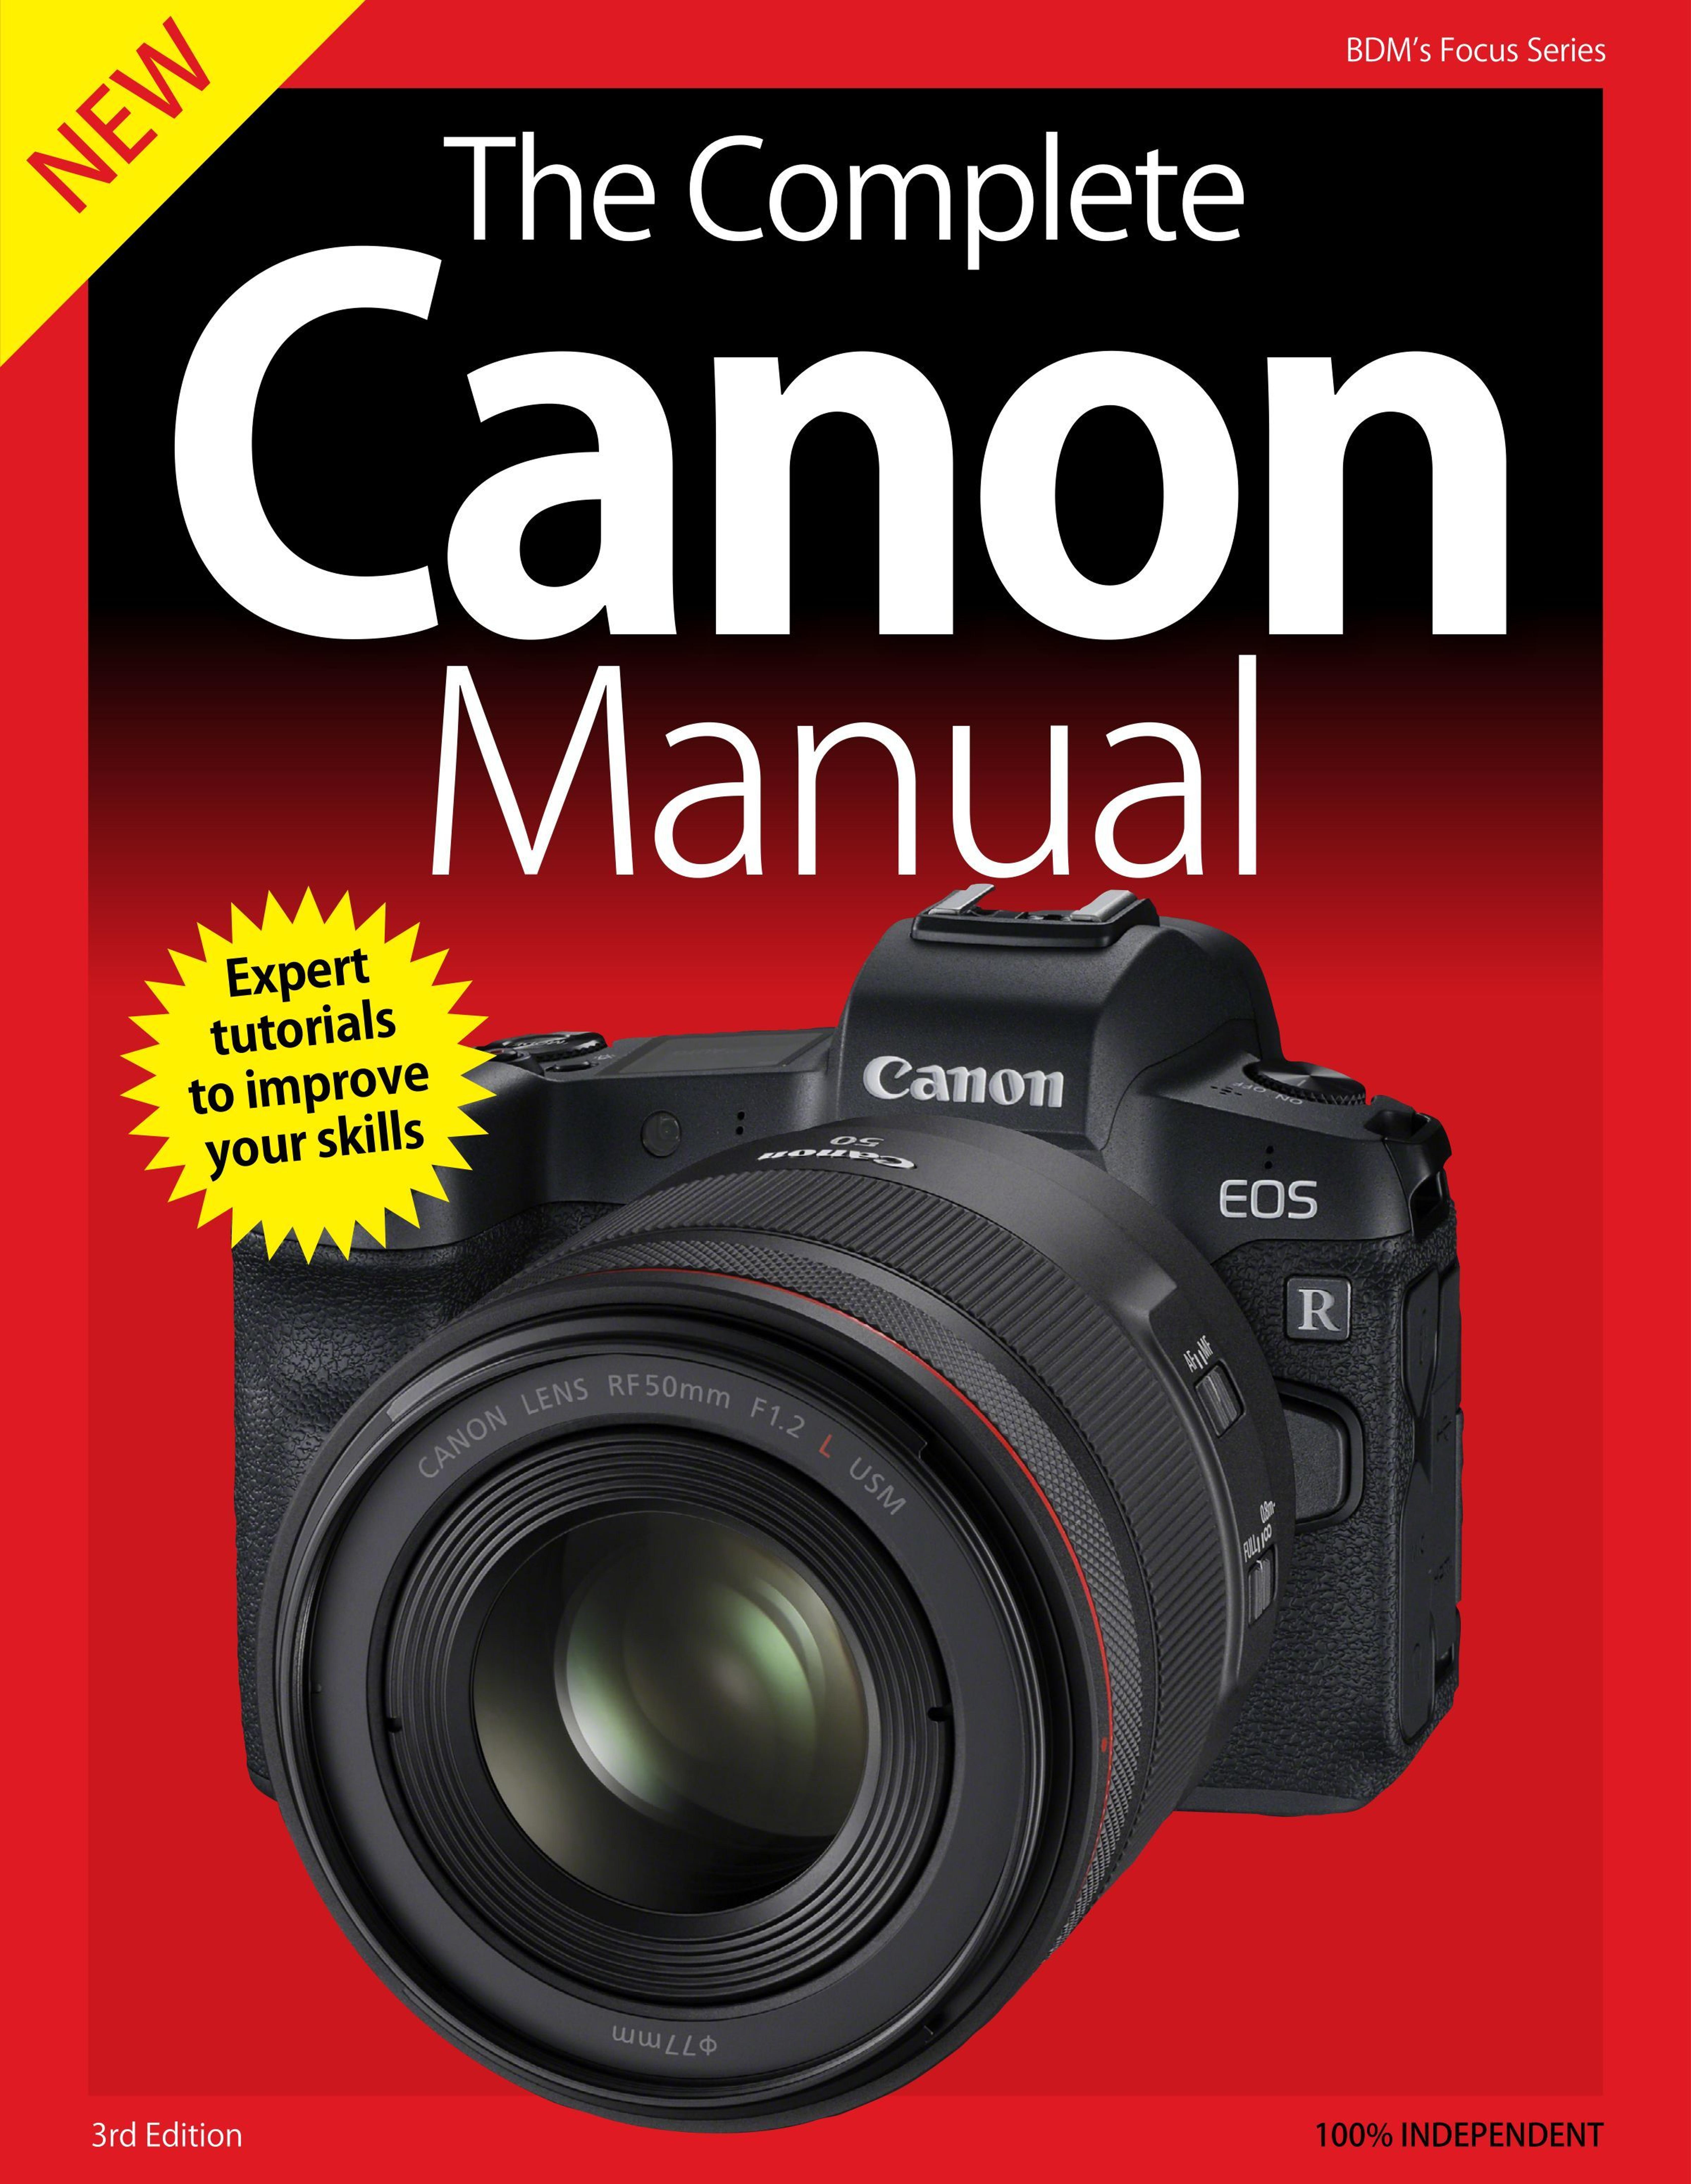 The Complete Canon Camera Manual - third edition - Free PDF Magazine